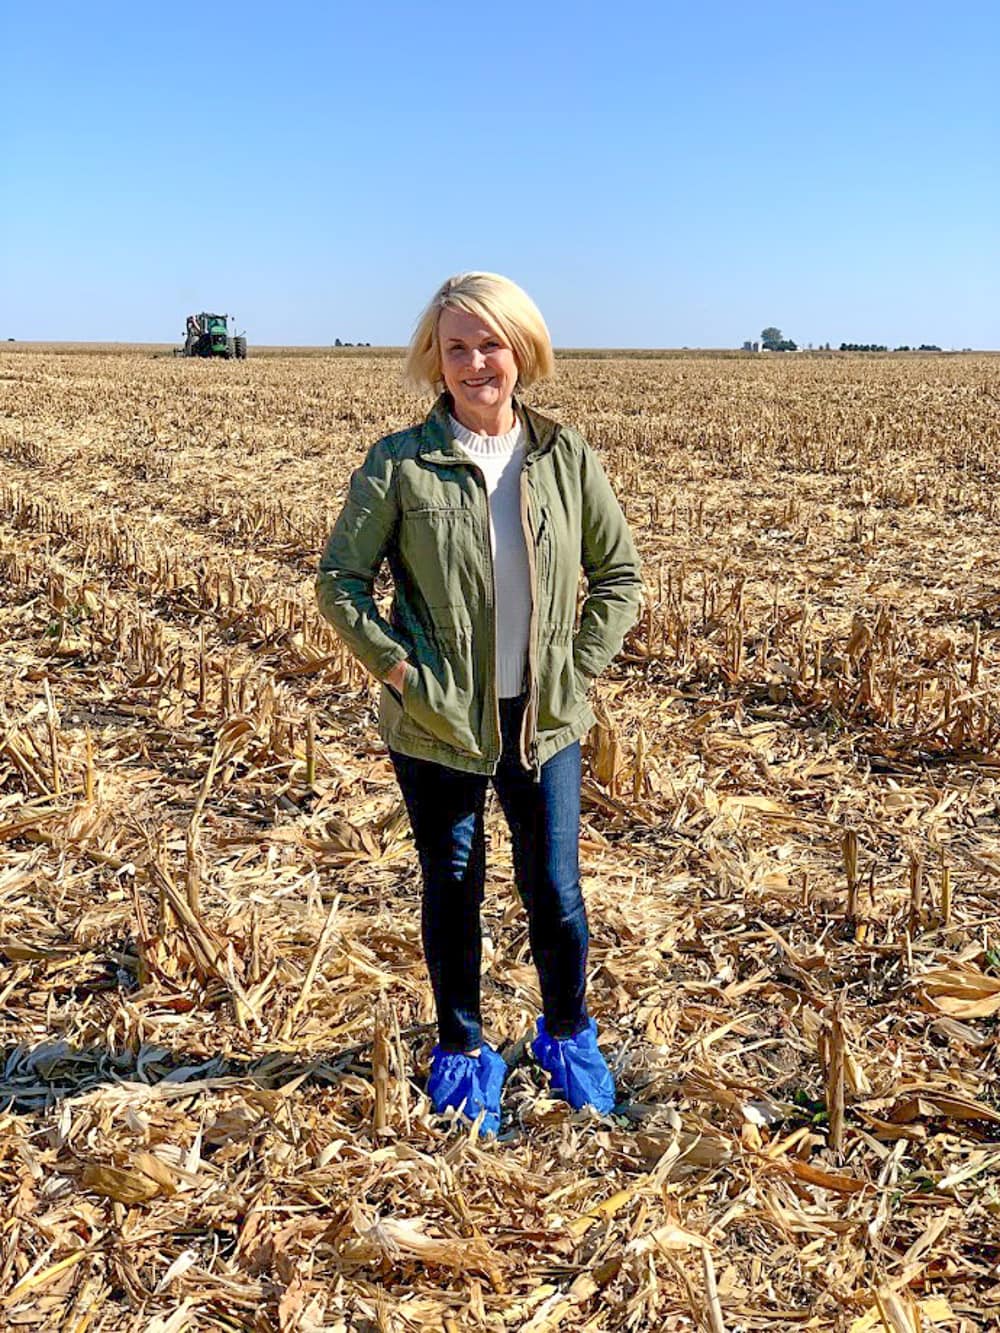 standing in a field of corn